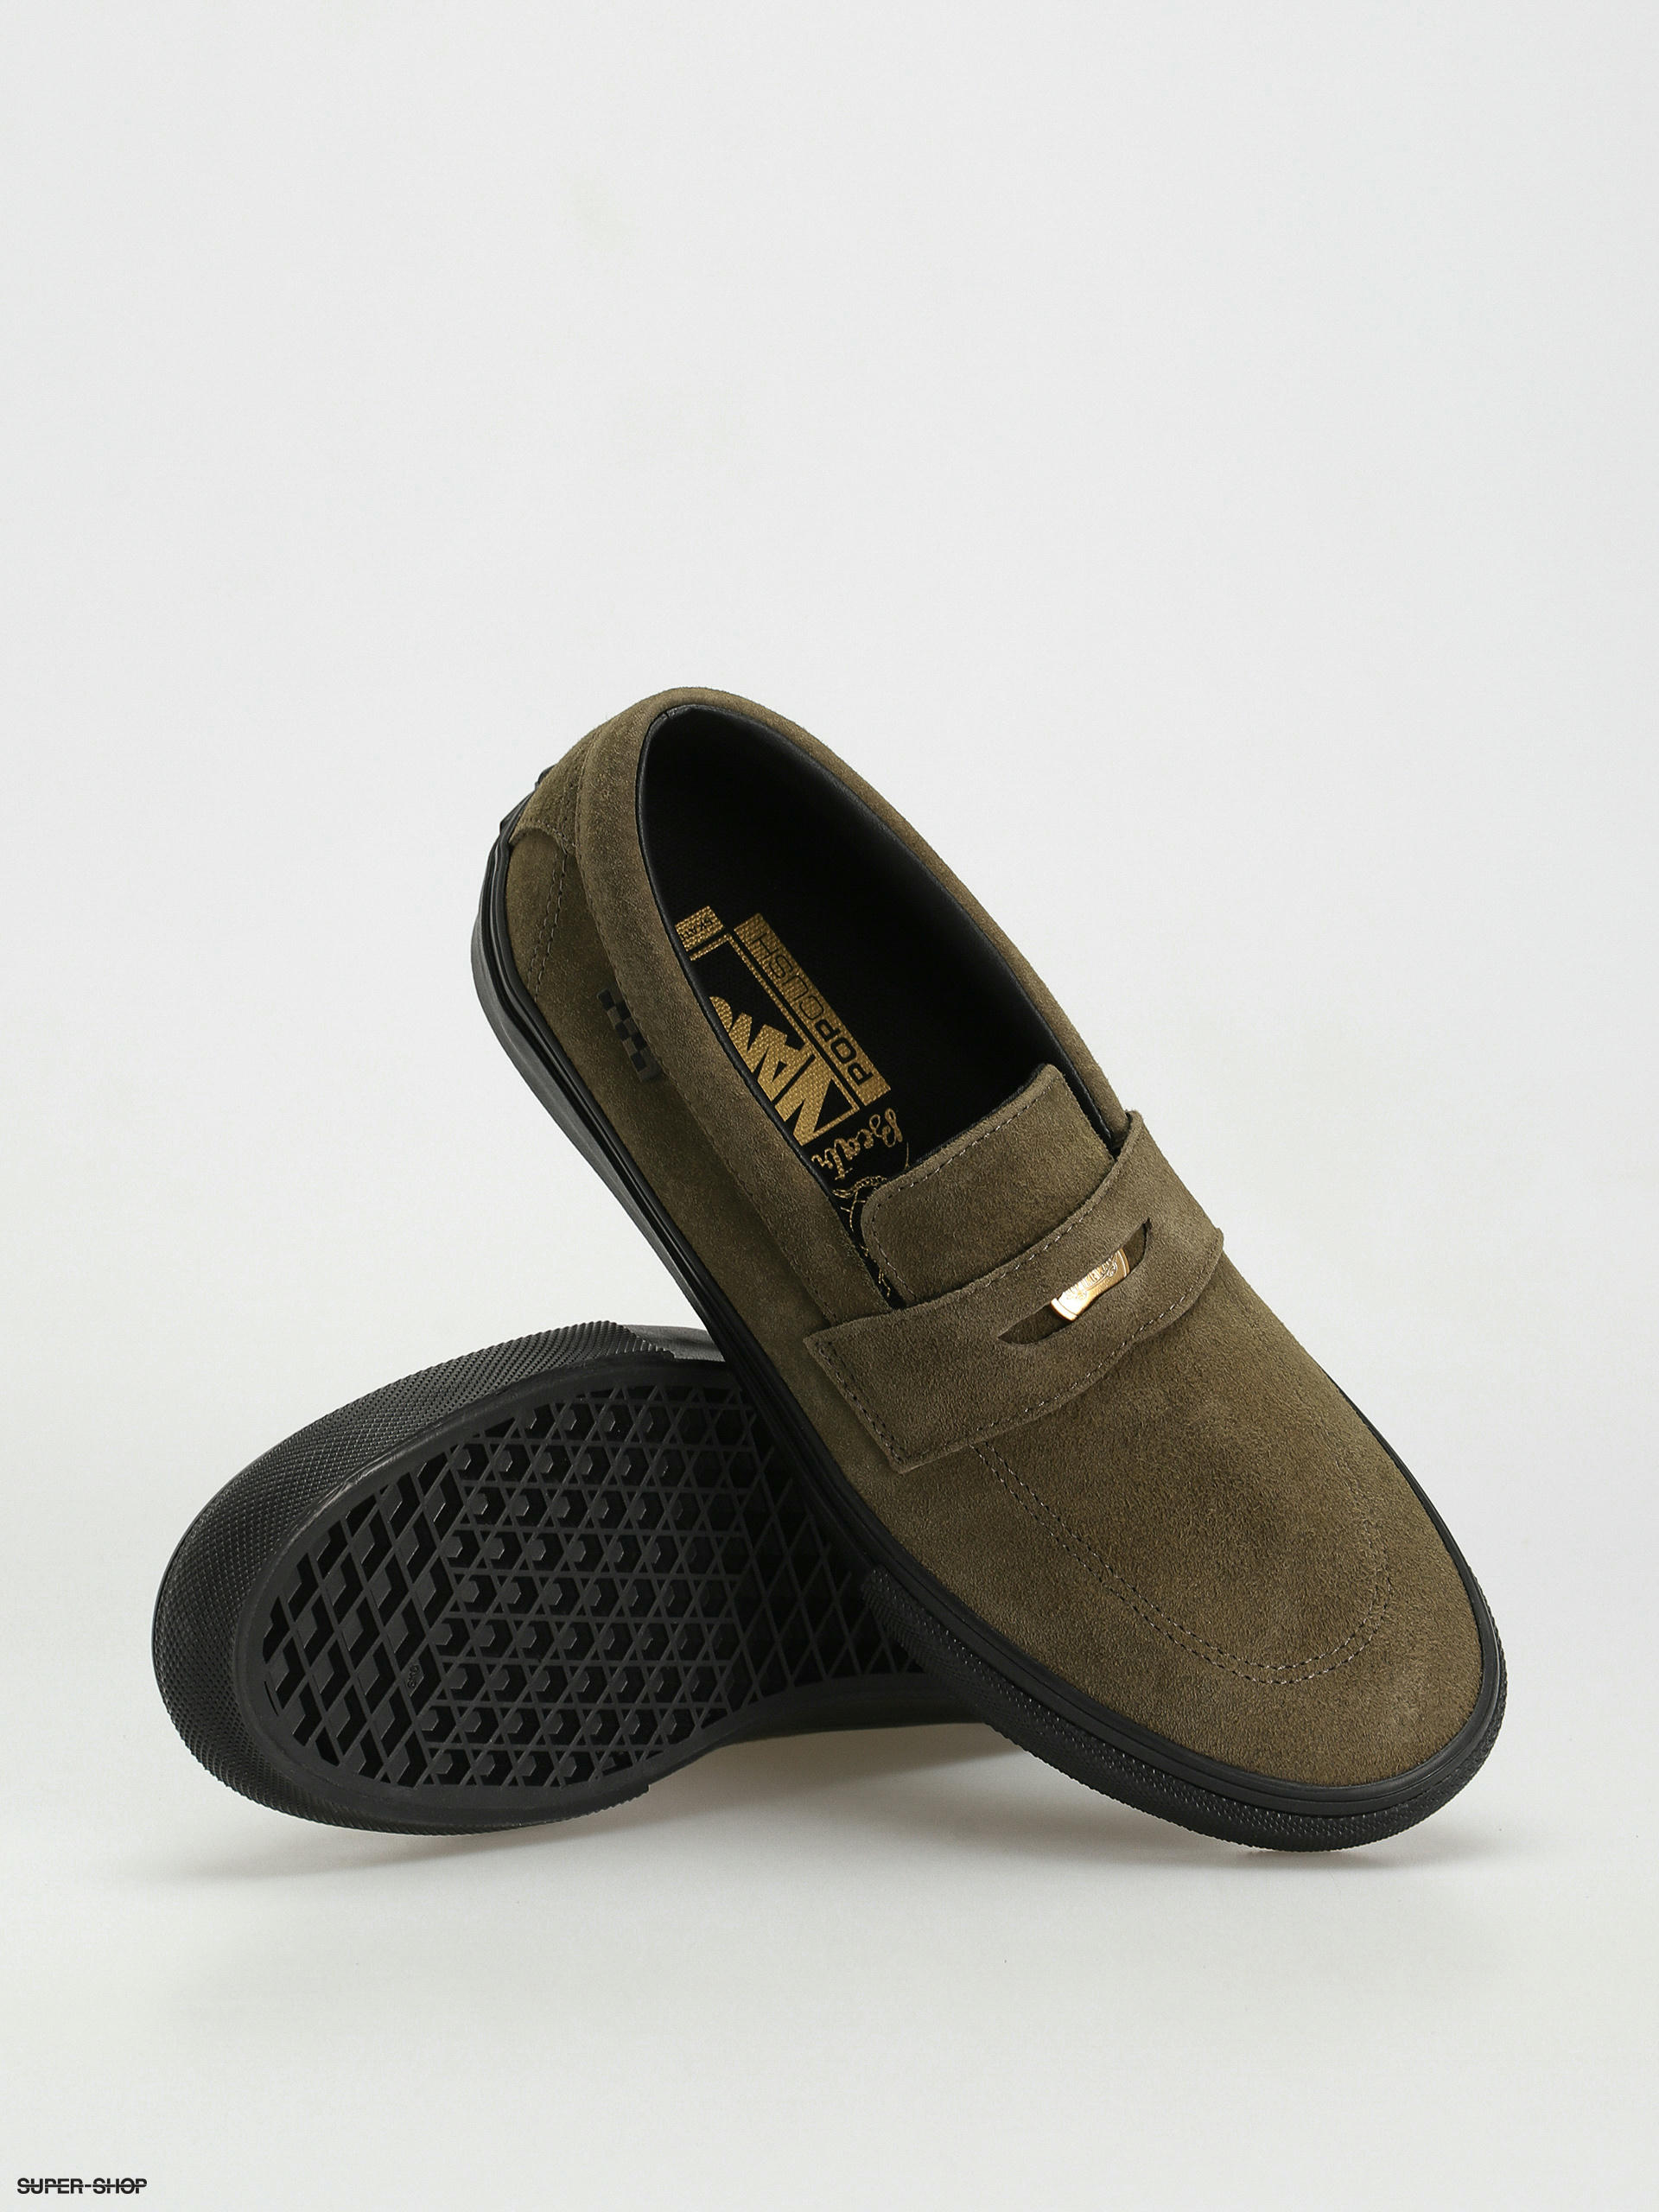 Vans Zahba Skate Style 53 X Beatrice Domond Shoes (dark olive)